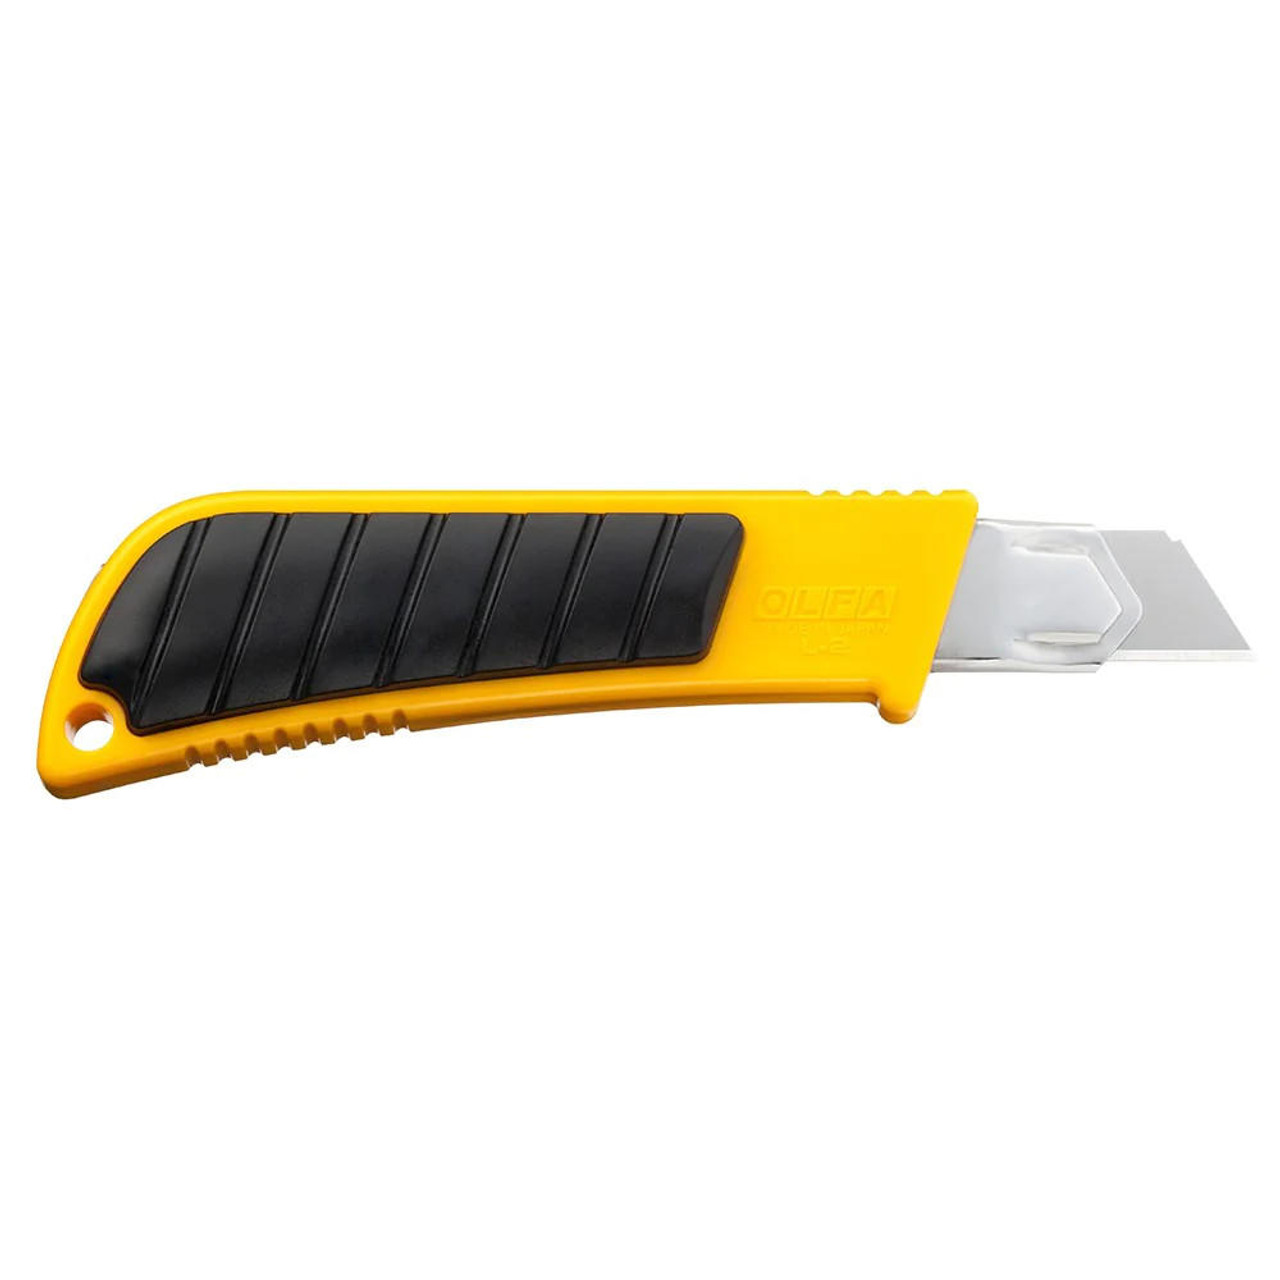 Olfa - Heavy-Duty Ratchet-Lock Utility Knife with Grip - Heavy